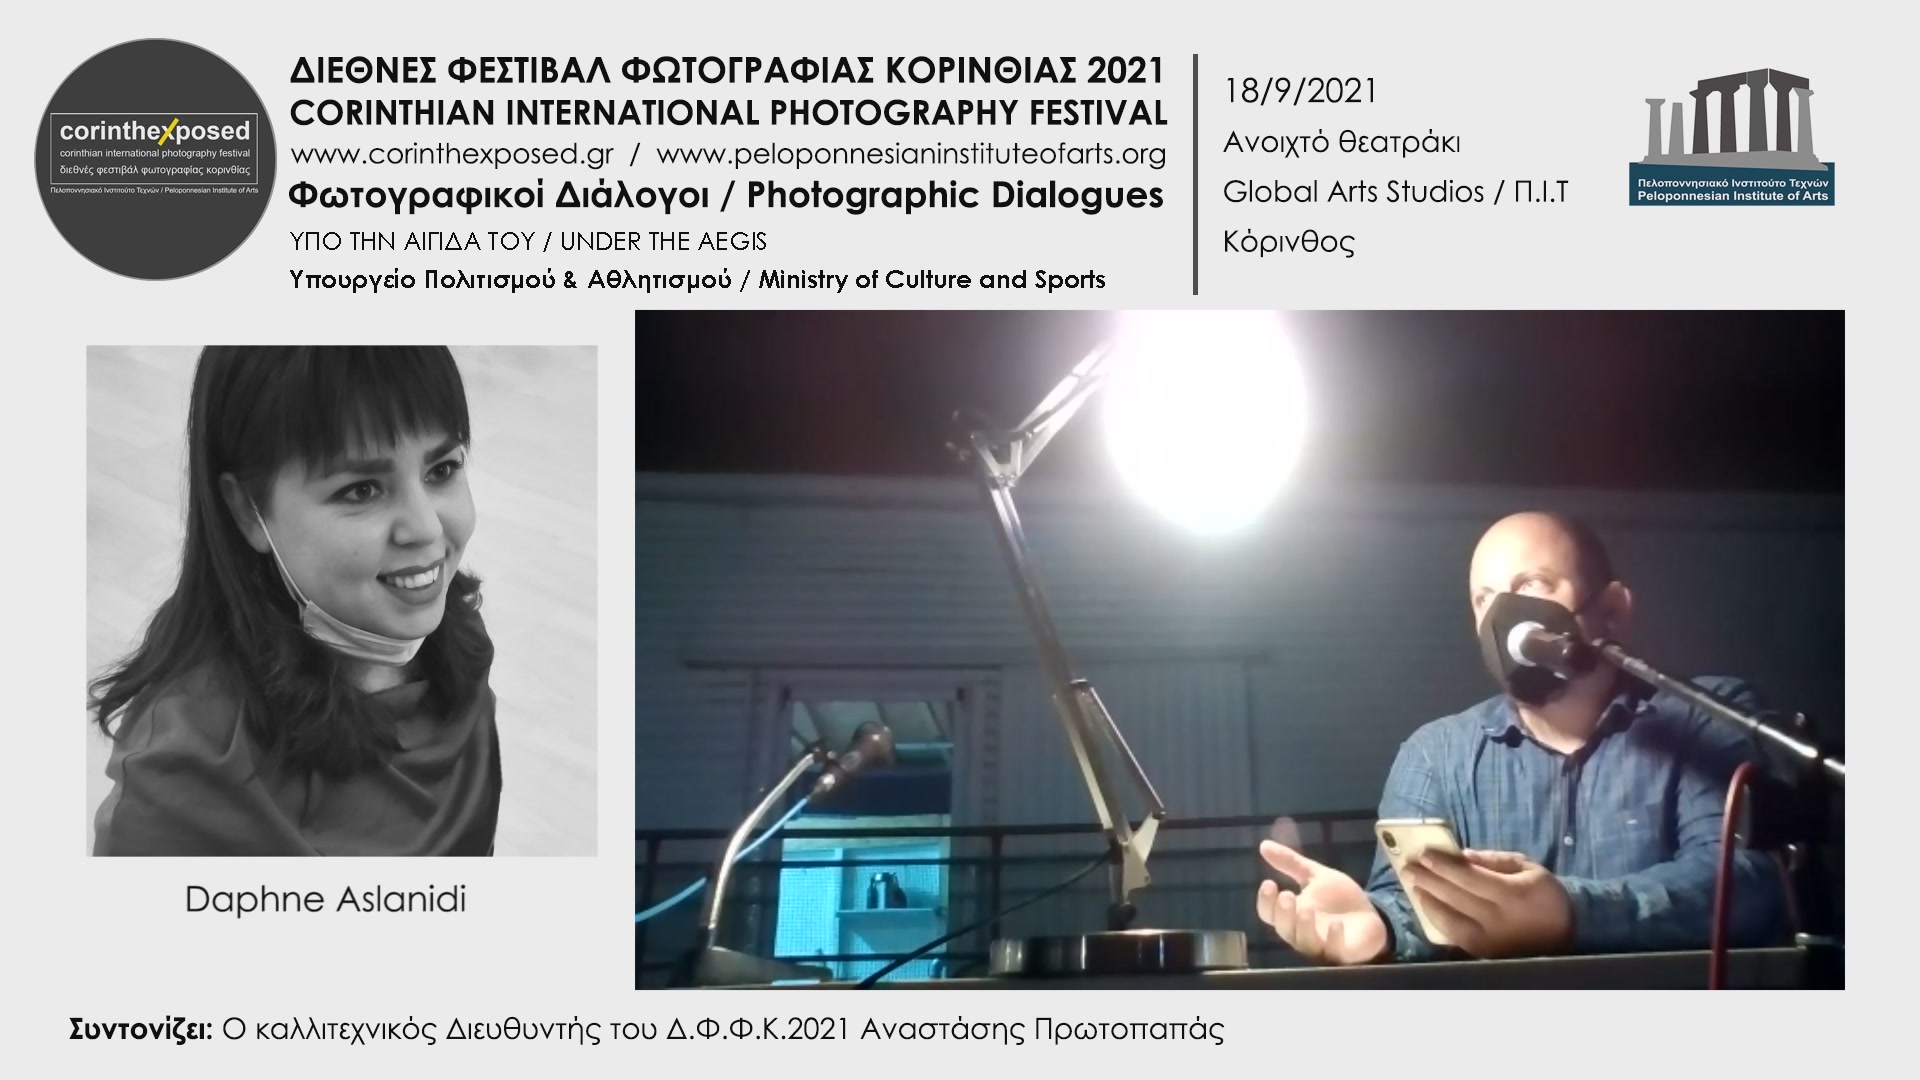 Daphne Aslanidi - Photographic dialogs 2021 (video)